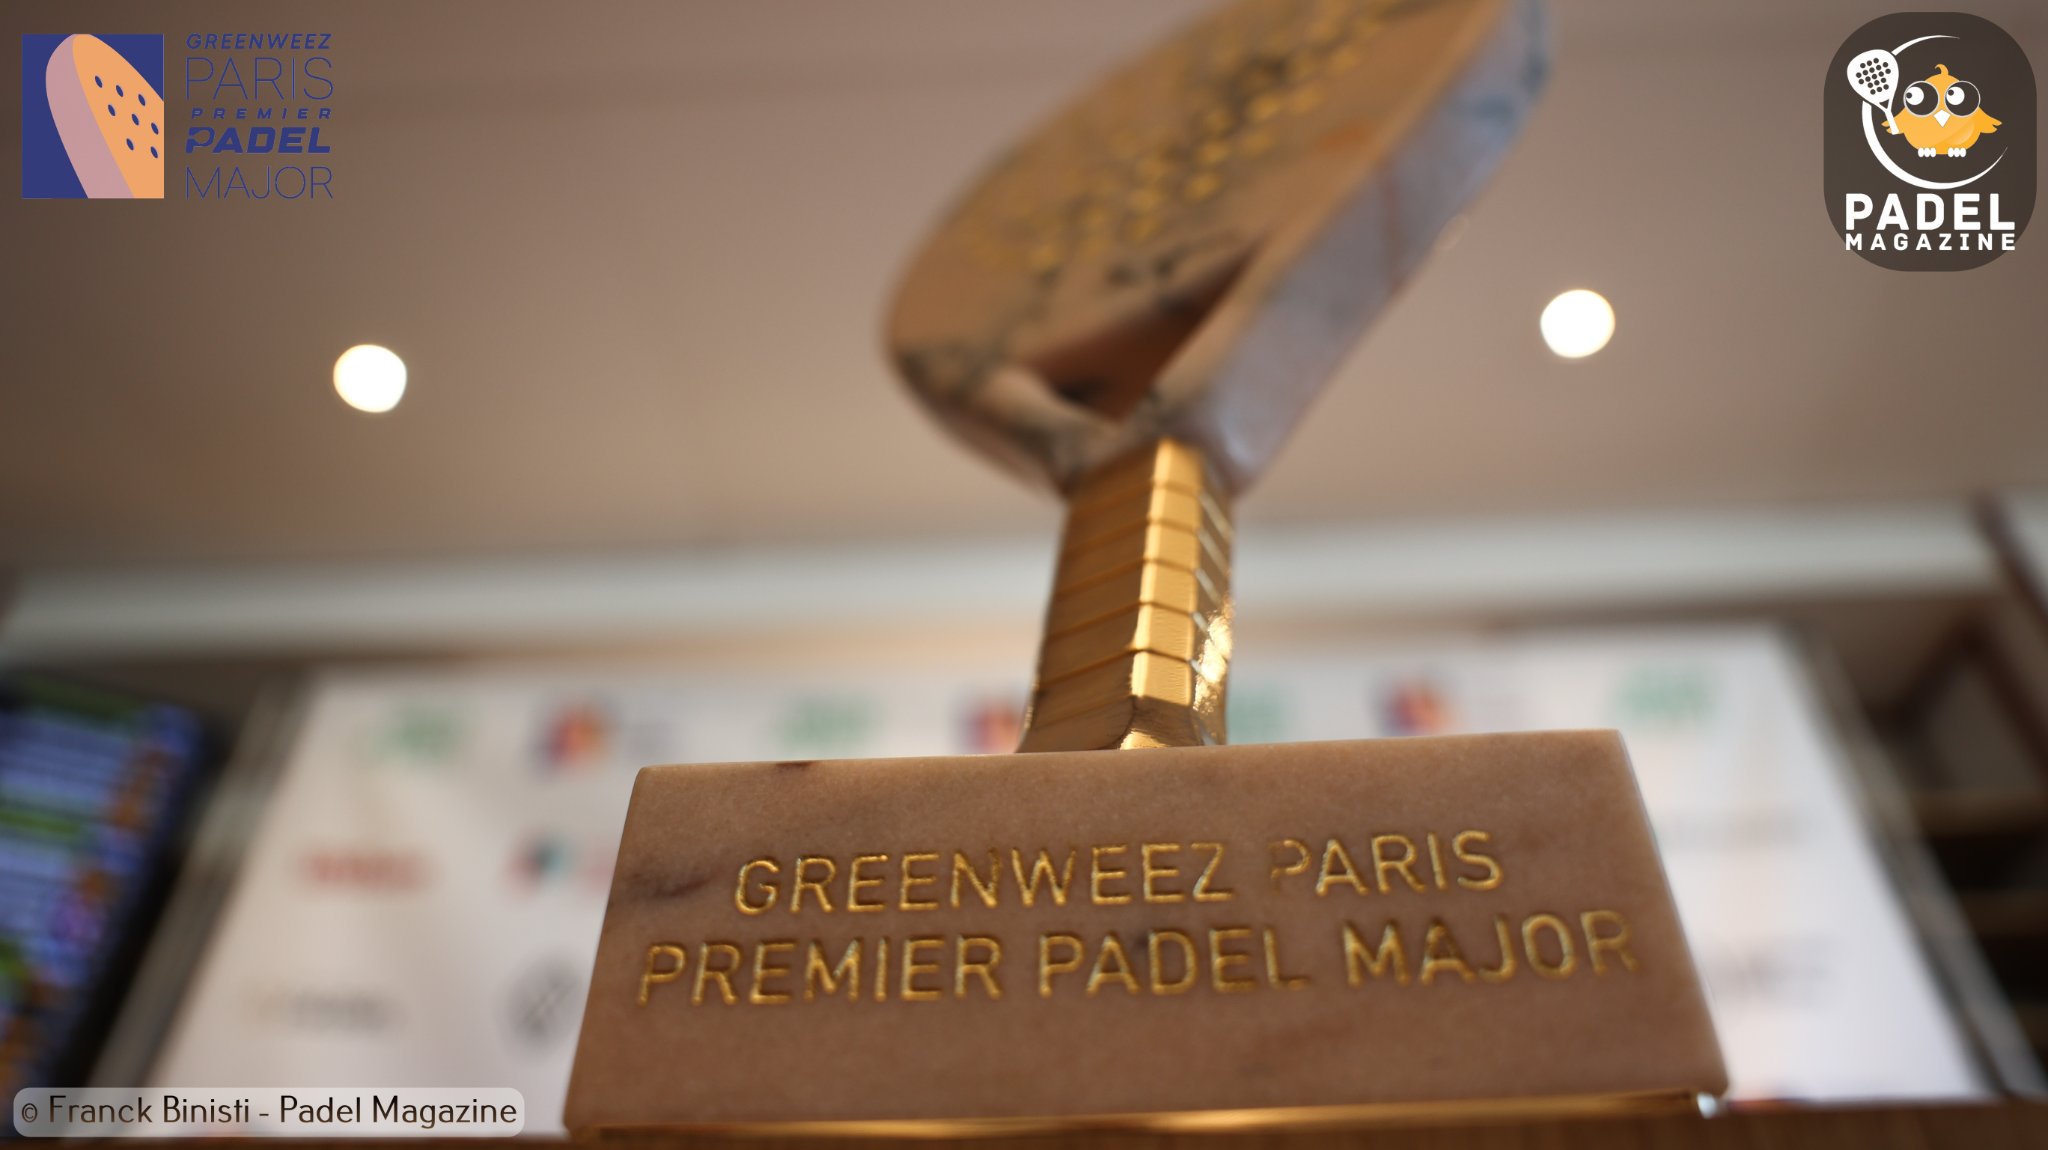 greenweez paris premier padel major 2022年罗兰加洛斯奖杯